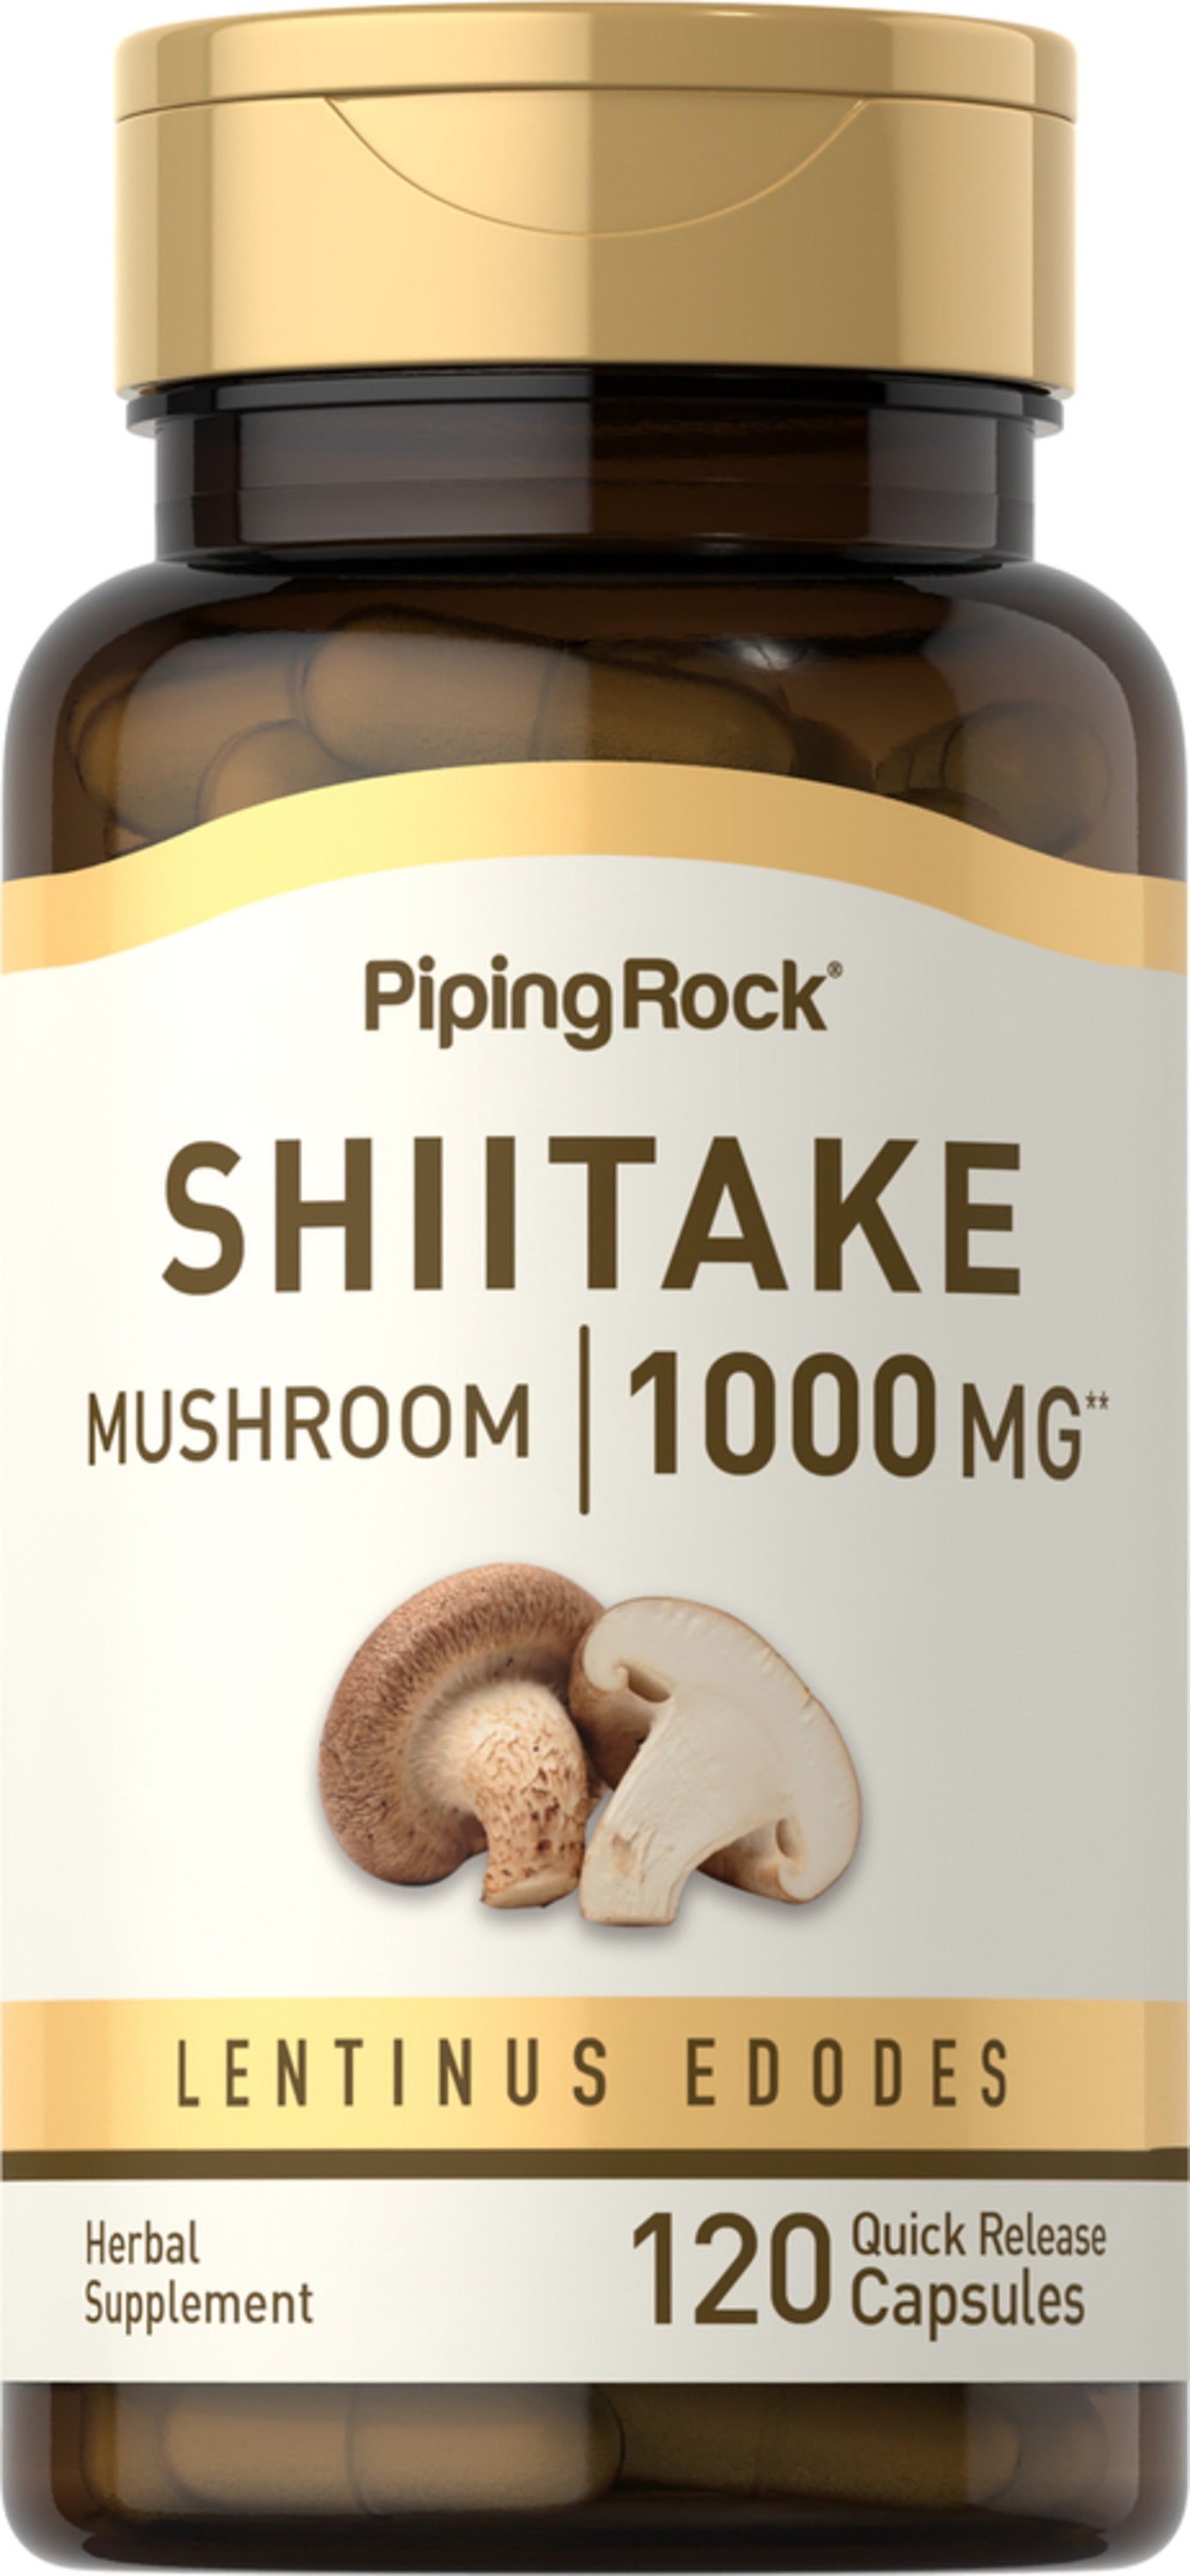 Shiitake Mushroom, 1000 mg, 120 Quick Release Capsules